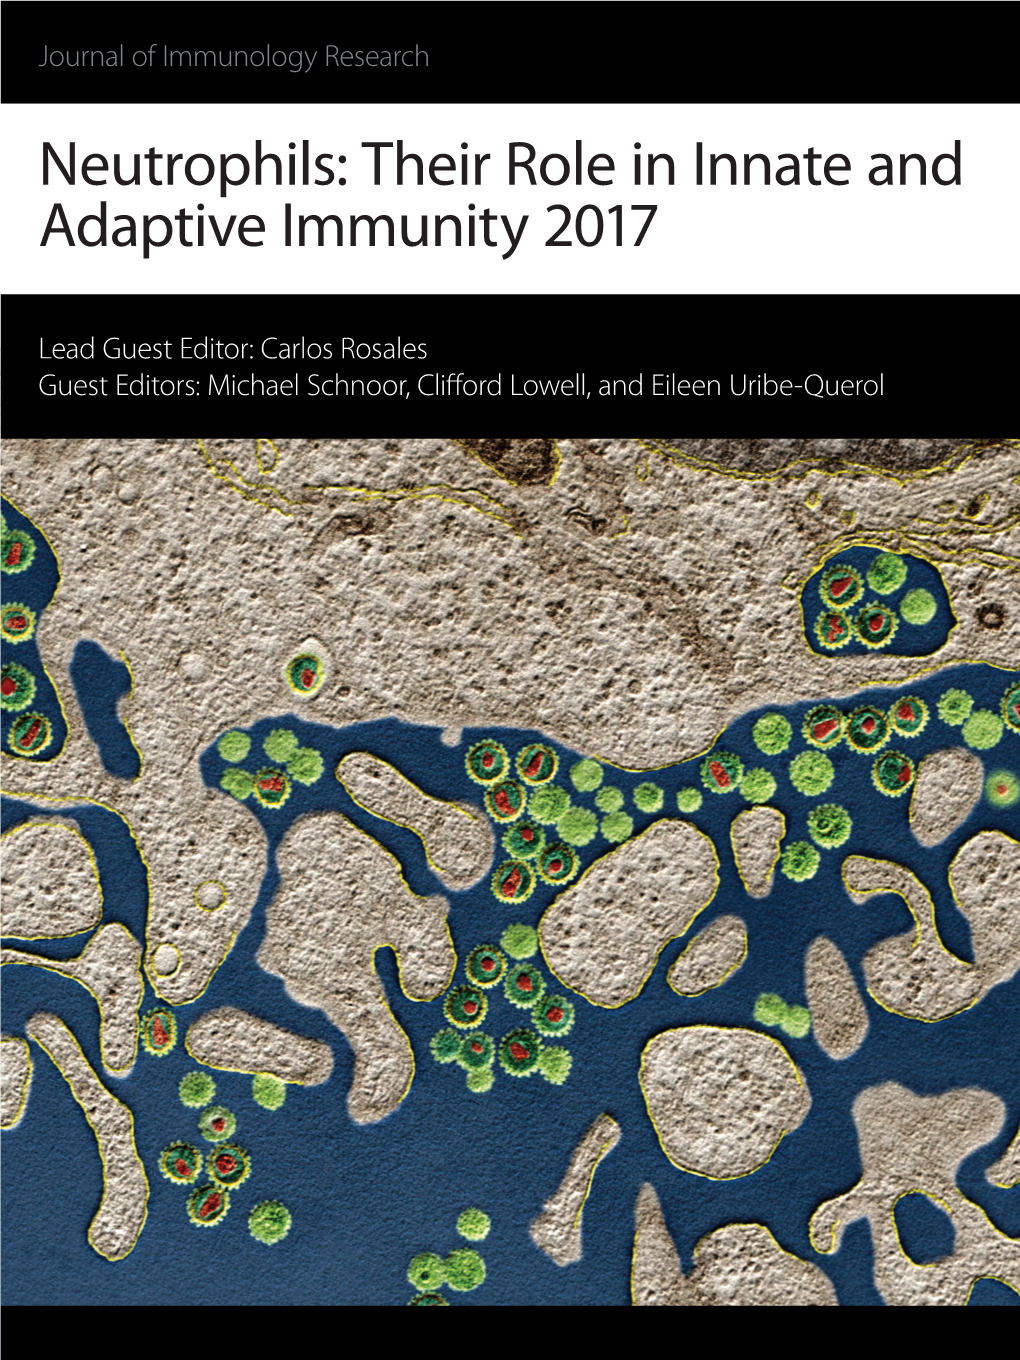 Neutrophils: Their Role in Innate and Adaptive Immunity 2017